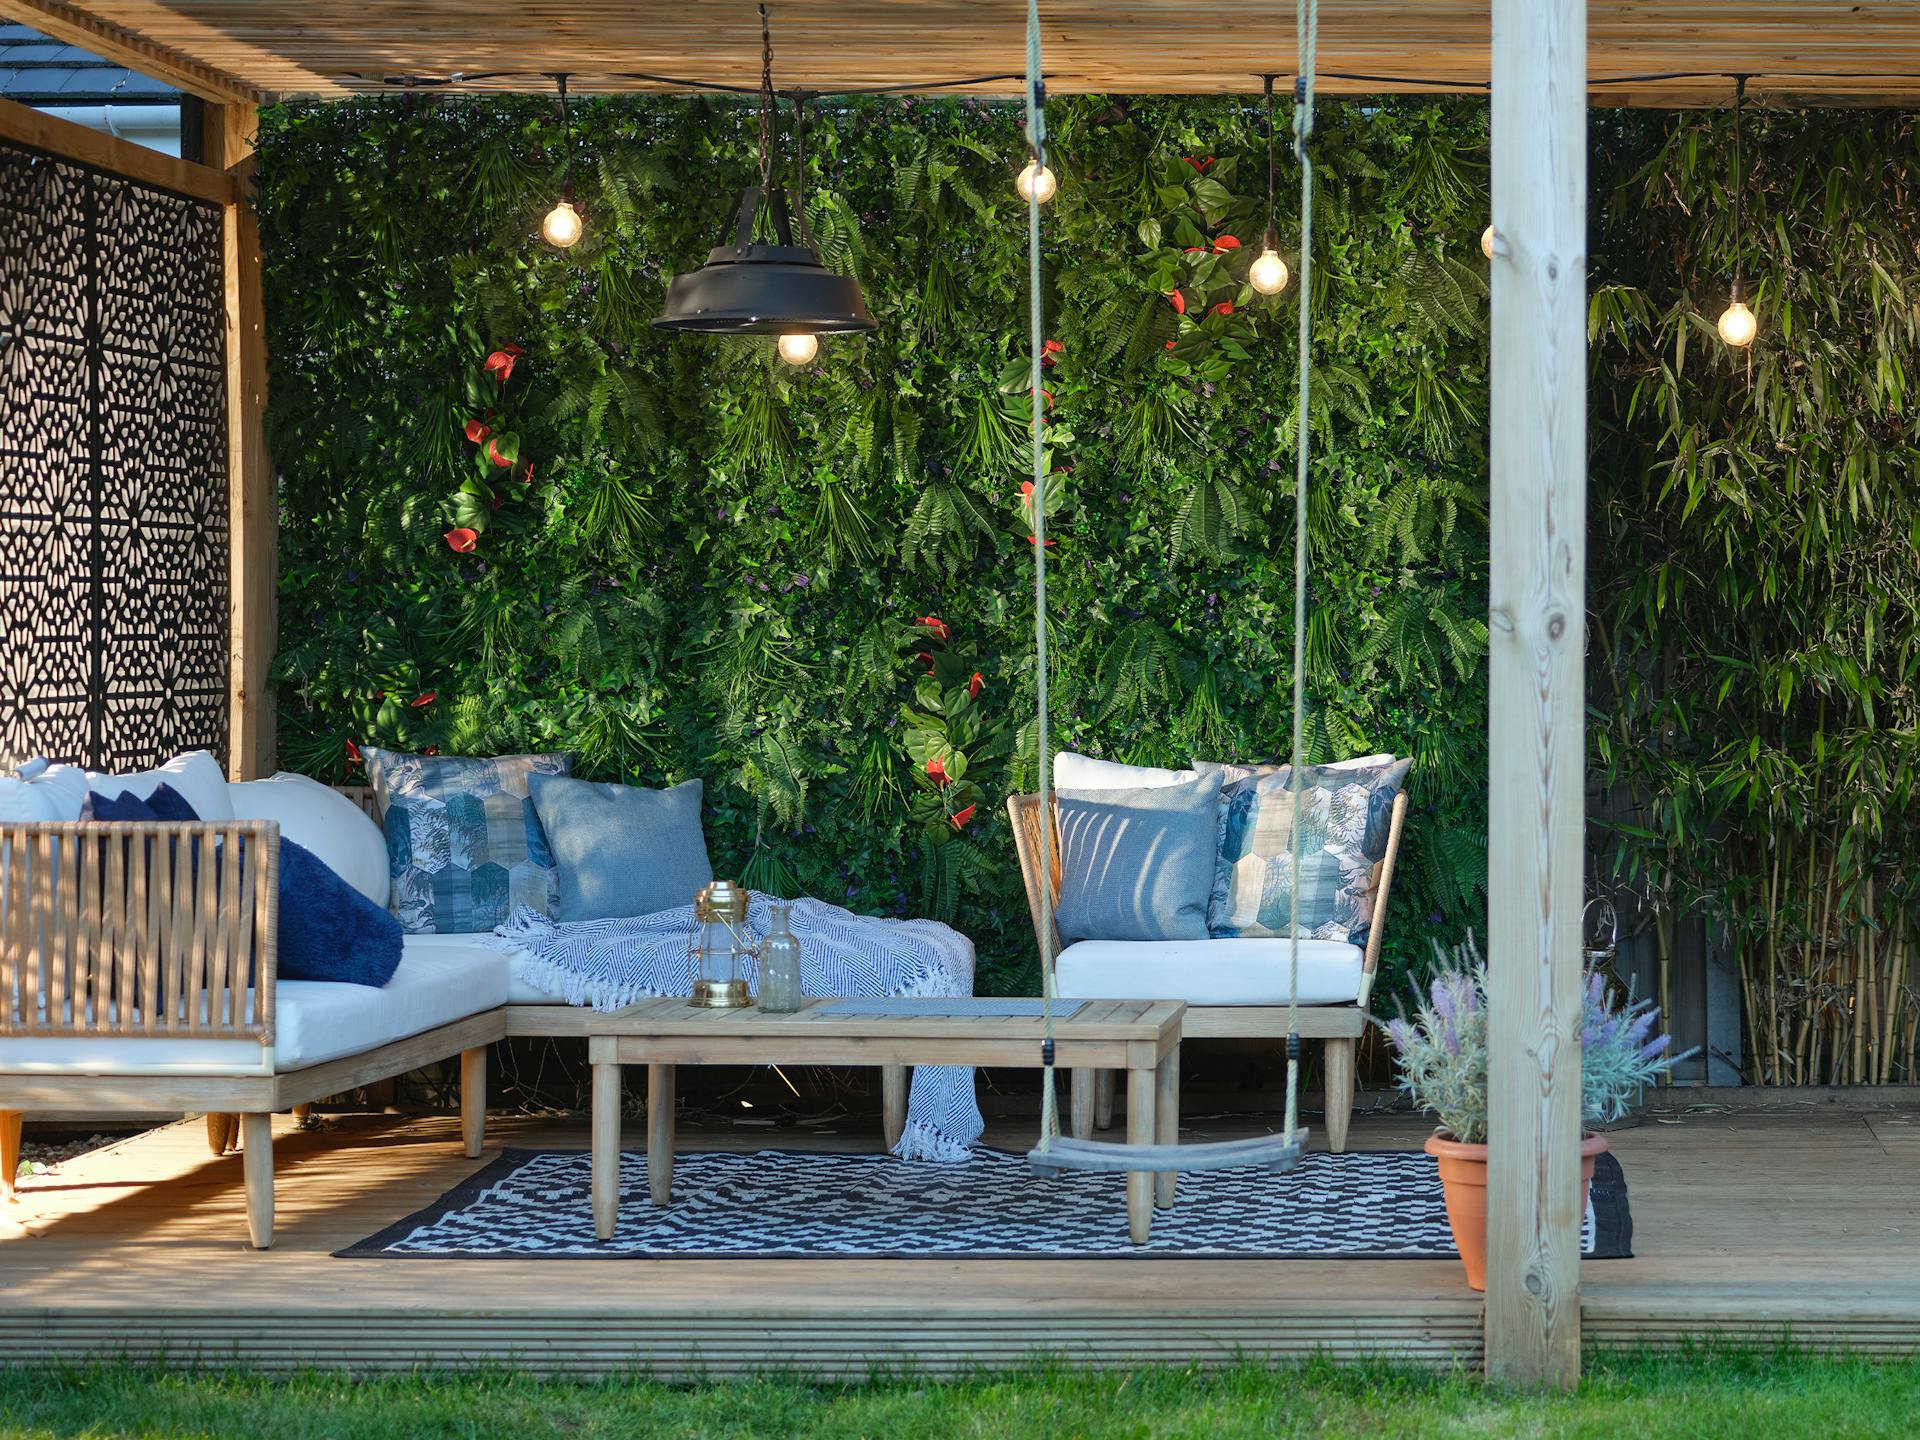 Artificial tropical living wall in outdoor garden seating area